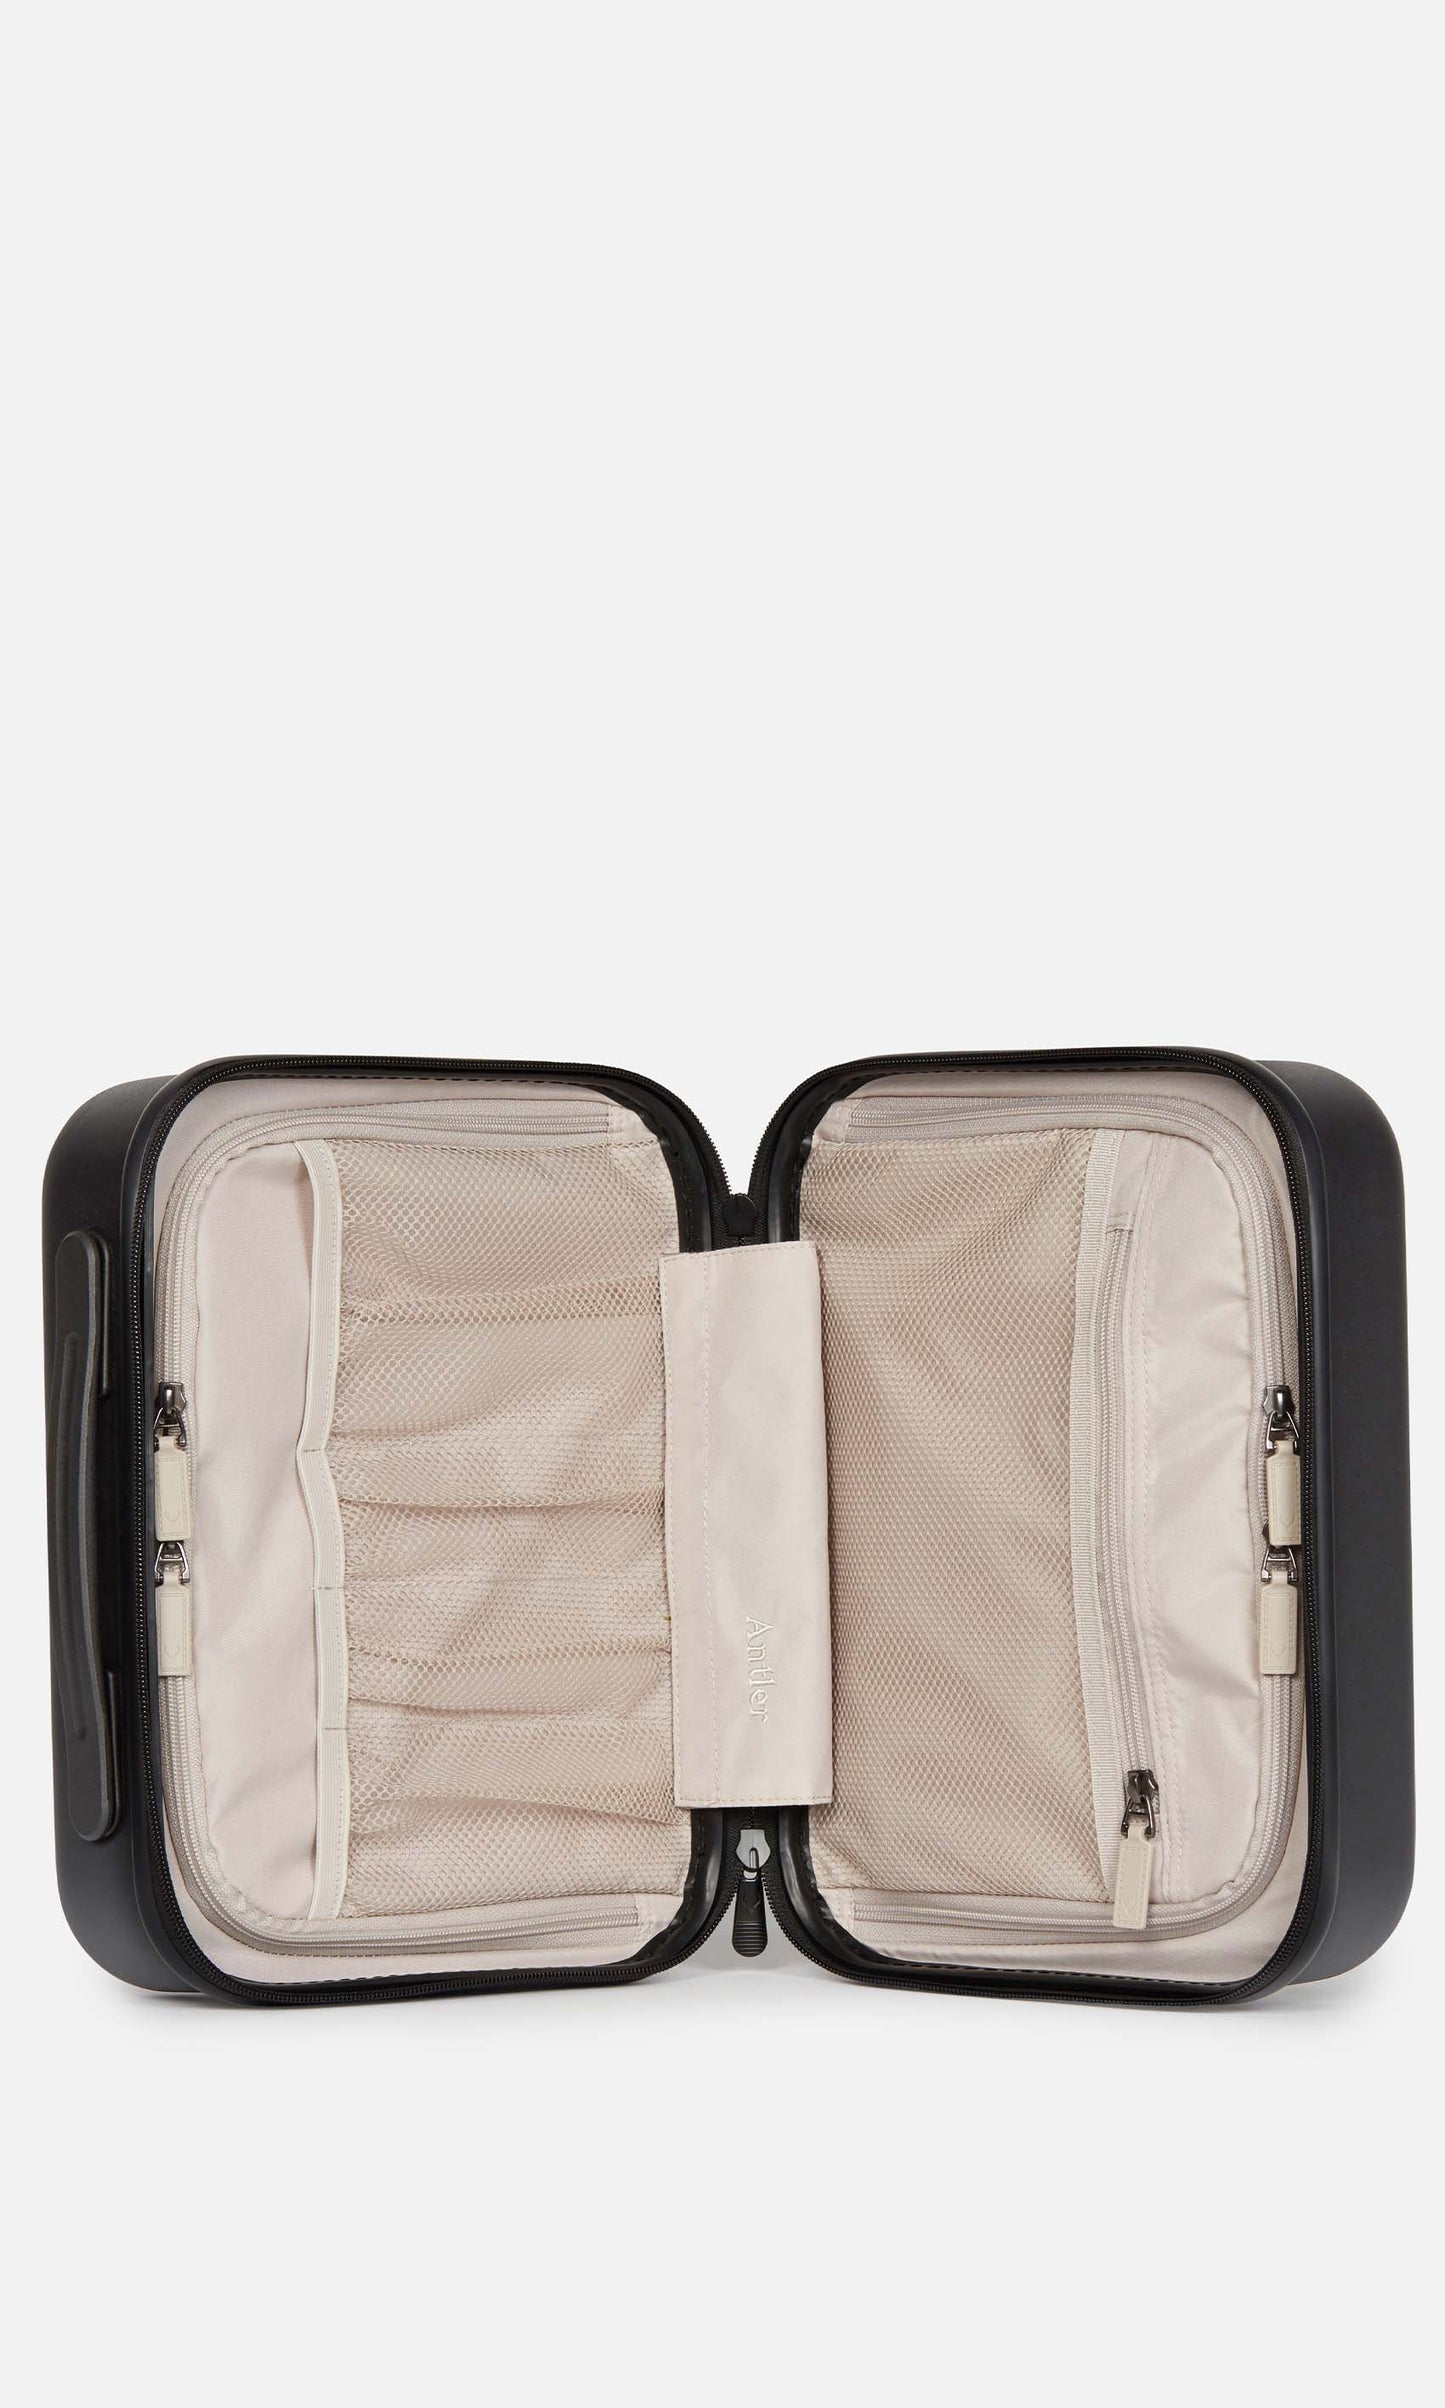 Antler Luggage -  Clifton vanity case in black - Hard Suitcases Clifton Vanity Case Black | Travel Accessories & Gifts | Antler 